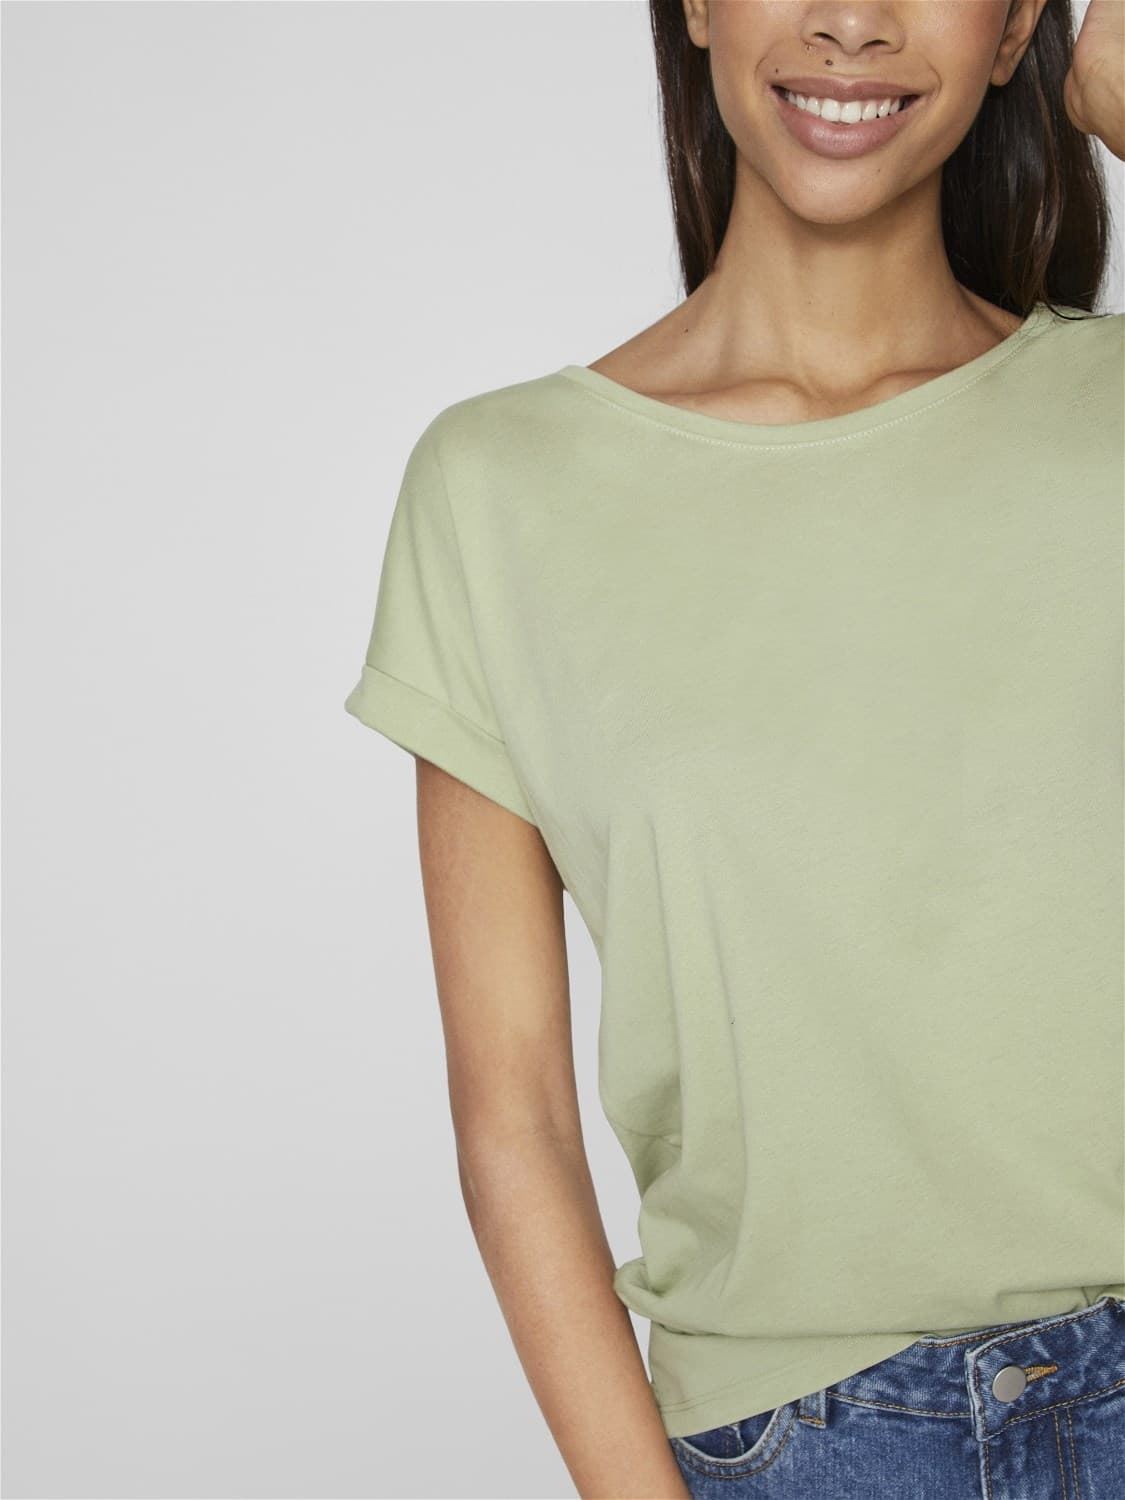 Camiseta verde vidreamers - Imagen 4